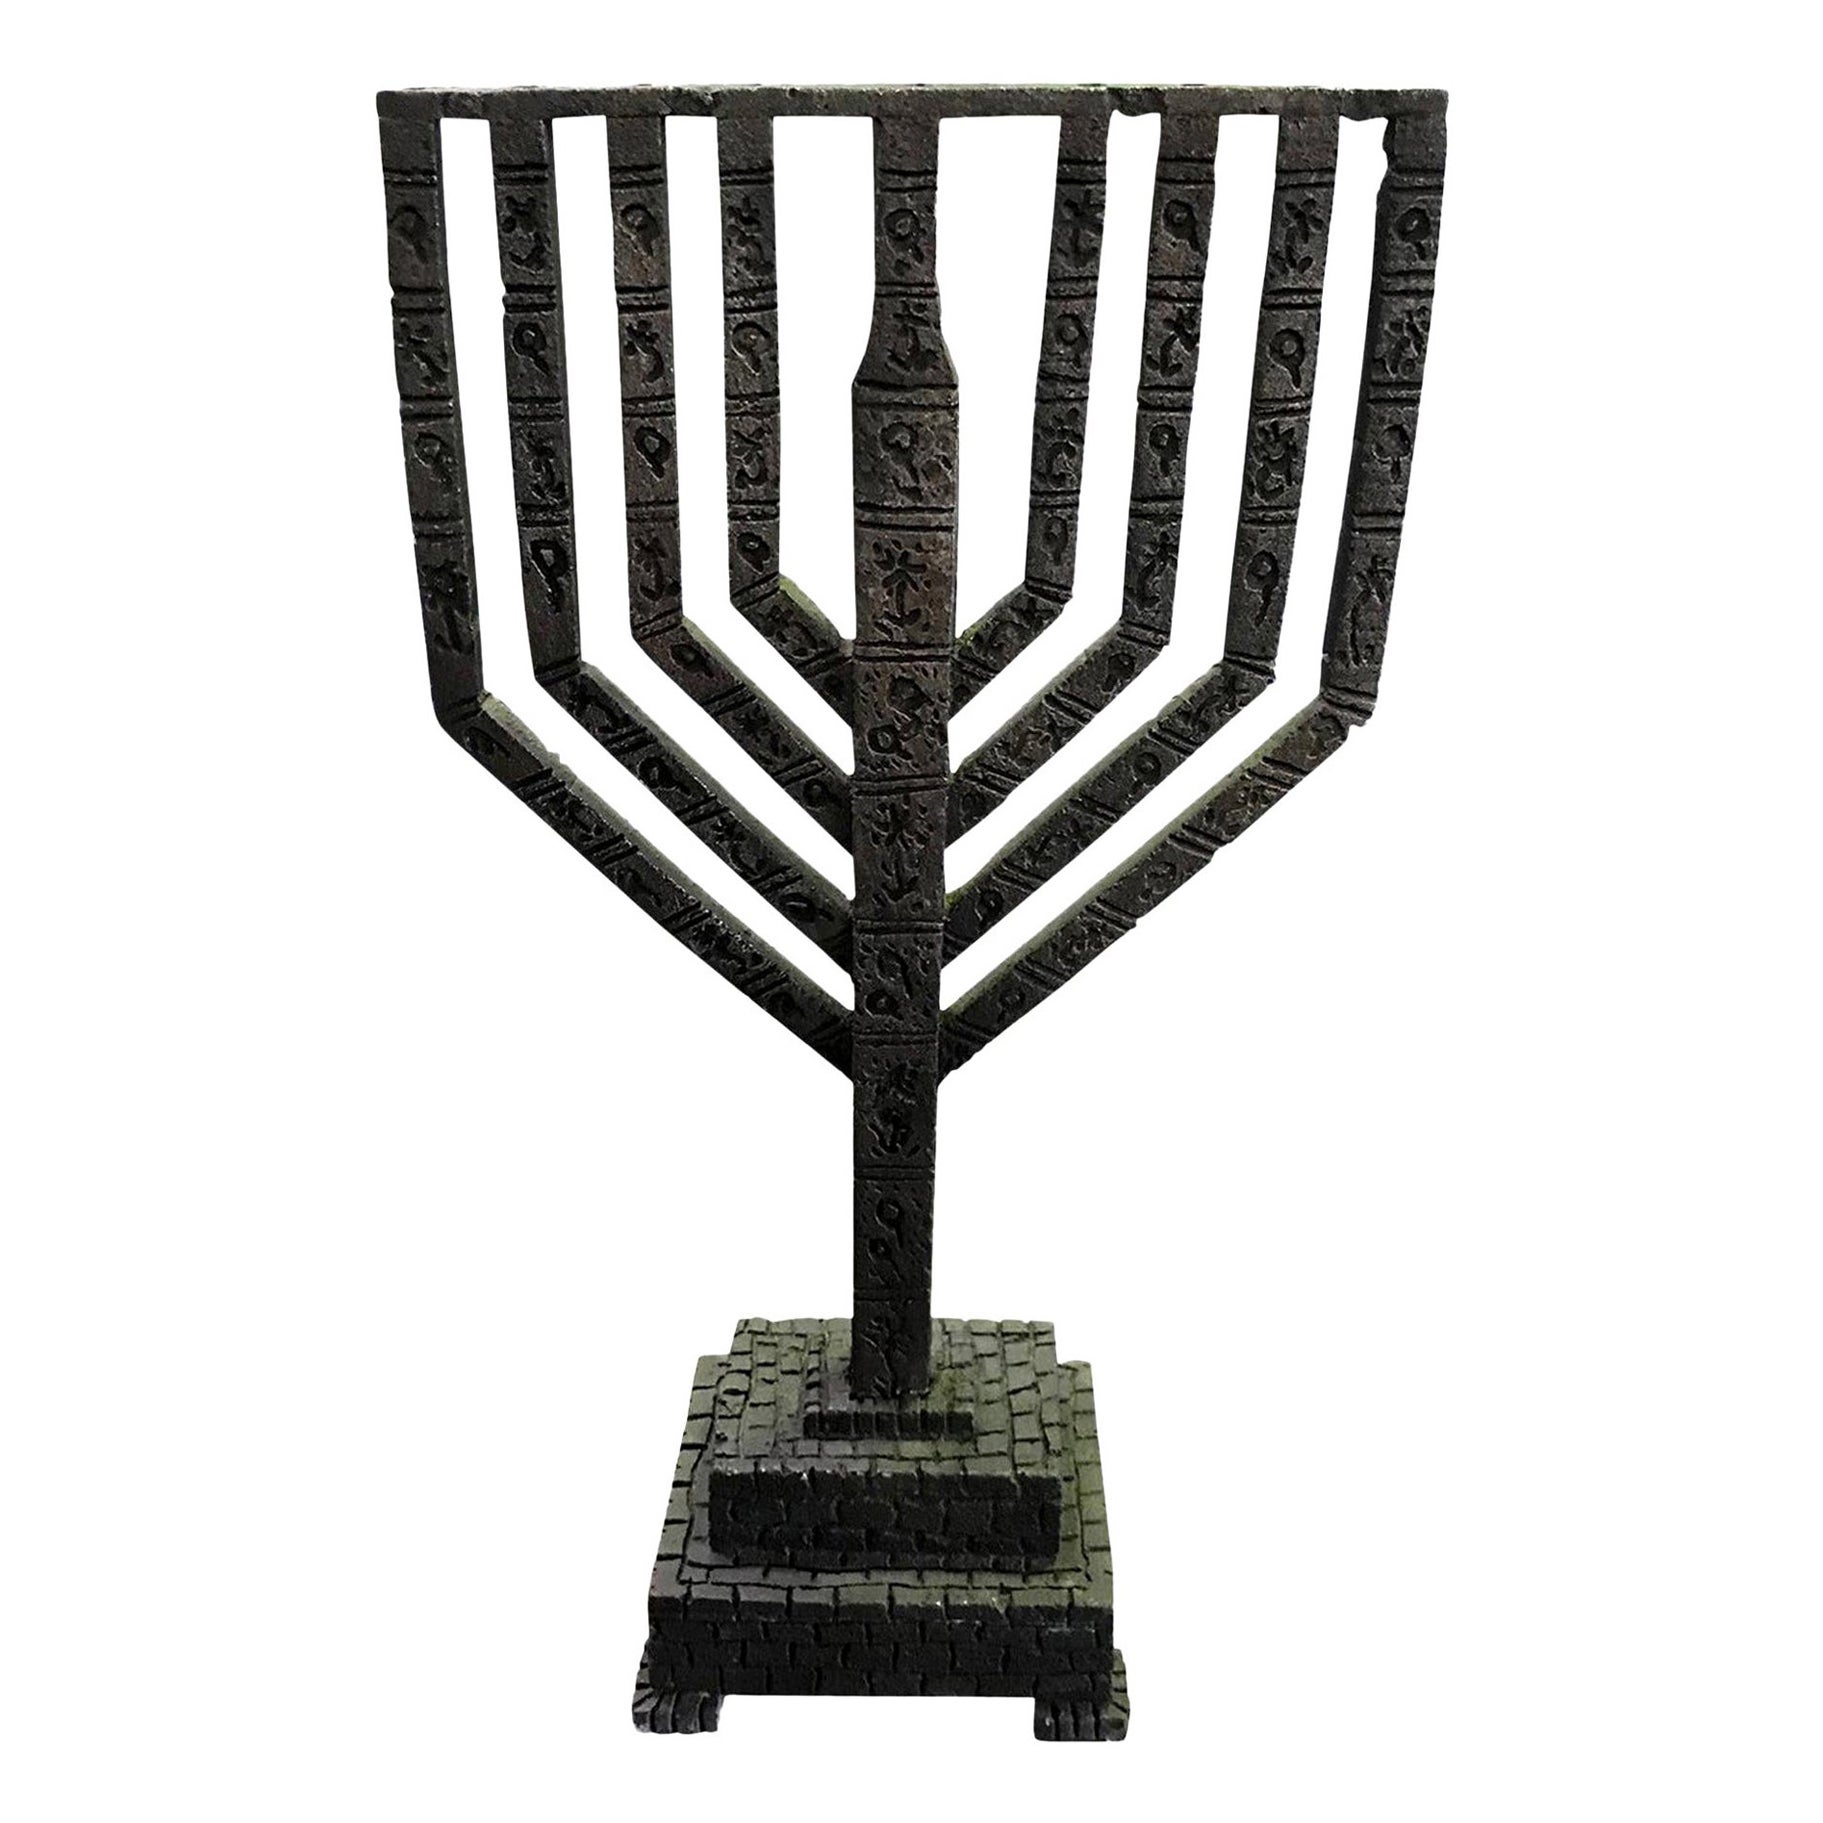 Große, schwere, brutalistische, handgeschmiedete israelische Hanukkah-Menorah-Skulptur aus Eisen